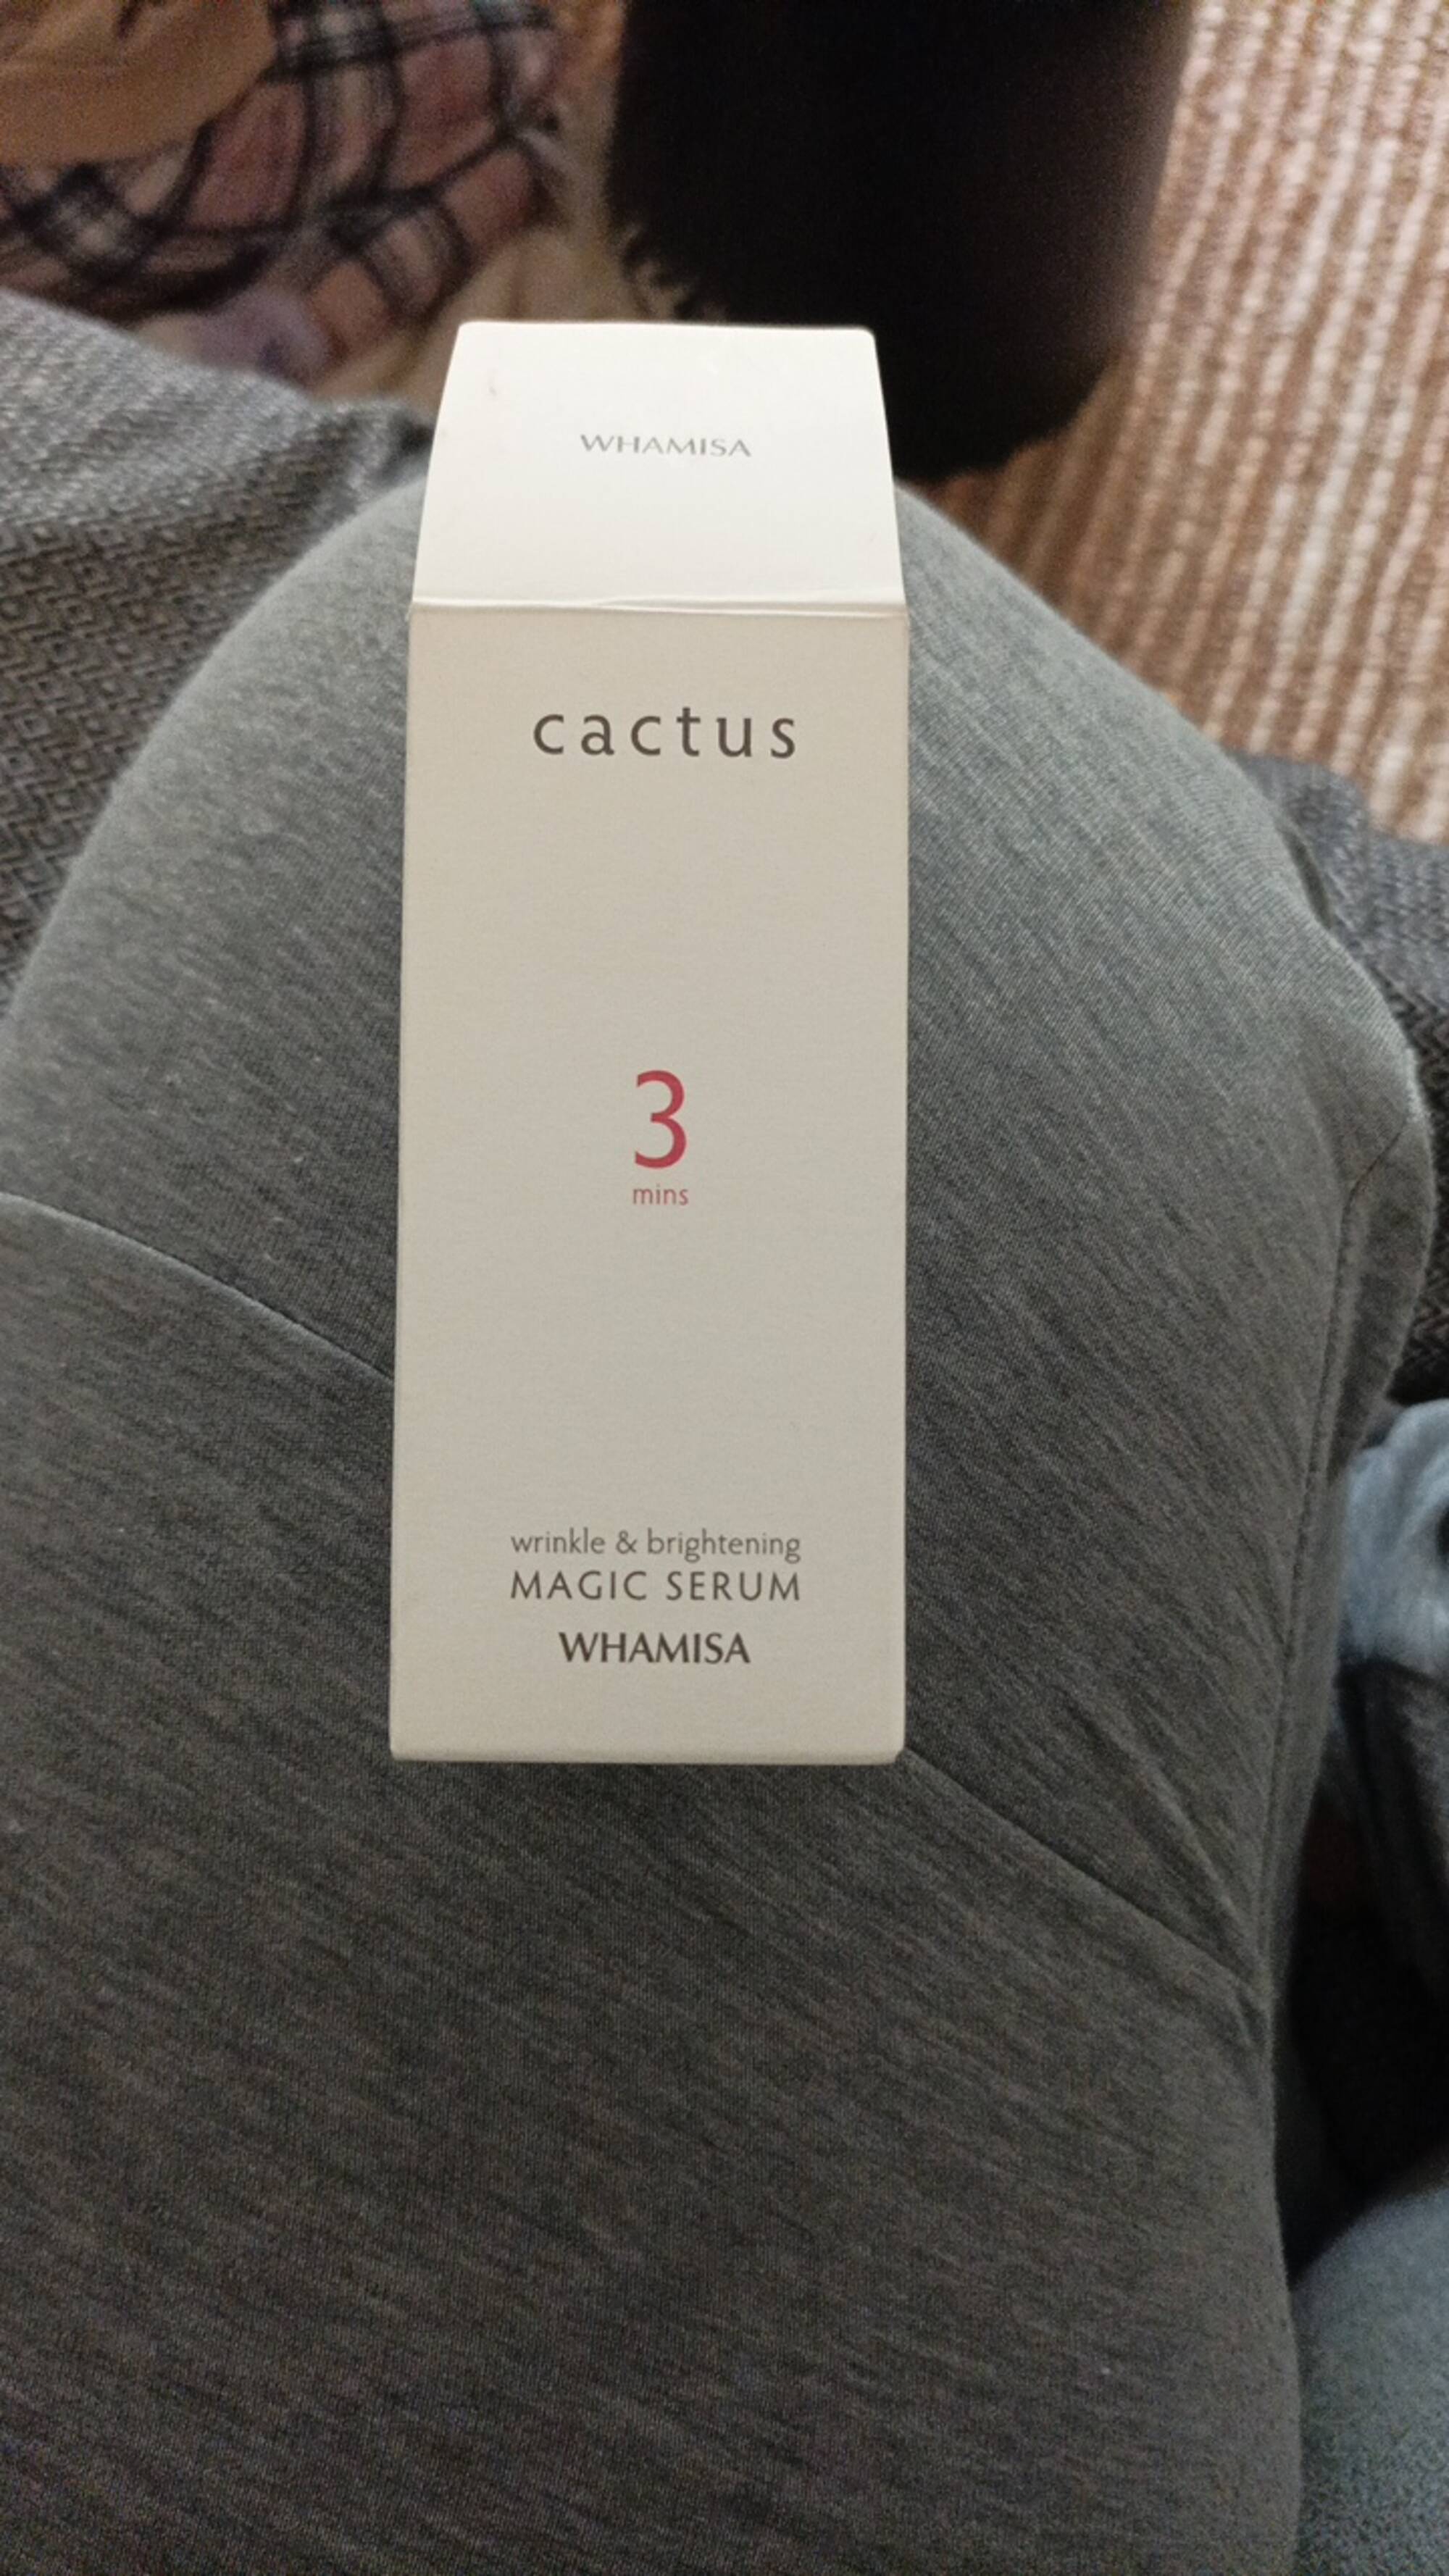 WHAMISA - Cactus - 3 mins magic sérum wrinkle & brightening